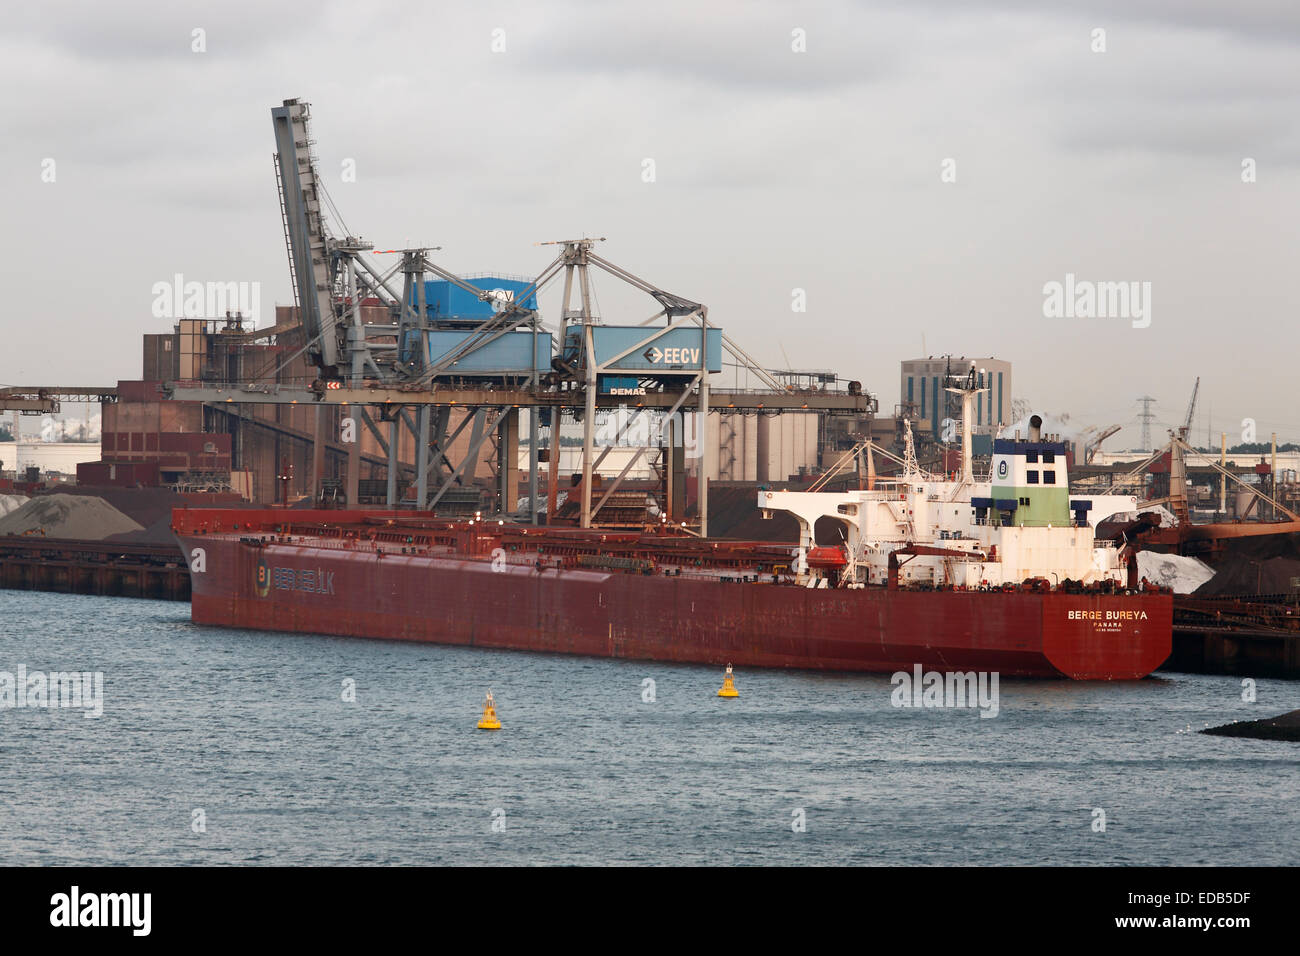 Freighter Berge Bureya (Bergebulk) Panama il carico di minerale grezzo nel porto industriale a Rotterdam, Paesi Bassi Foto Stock